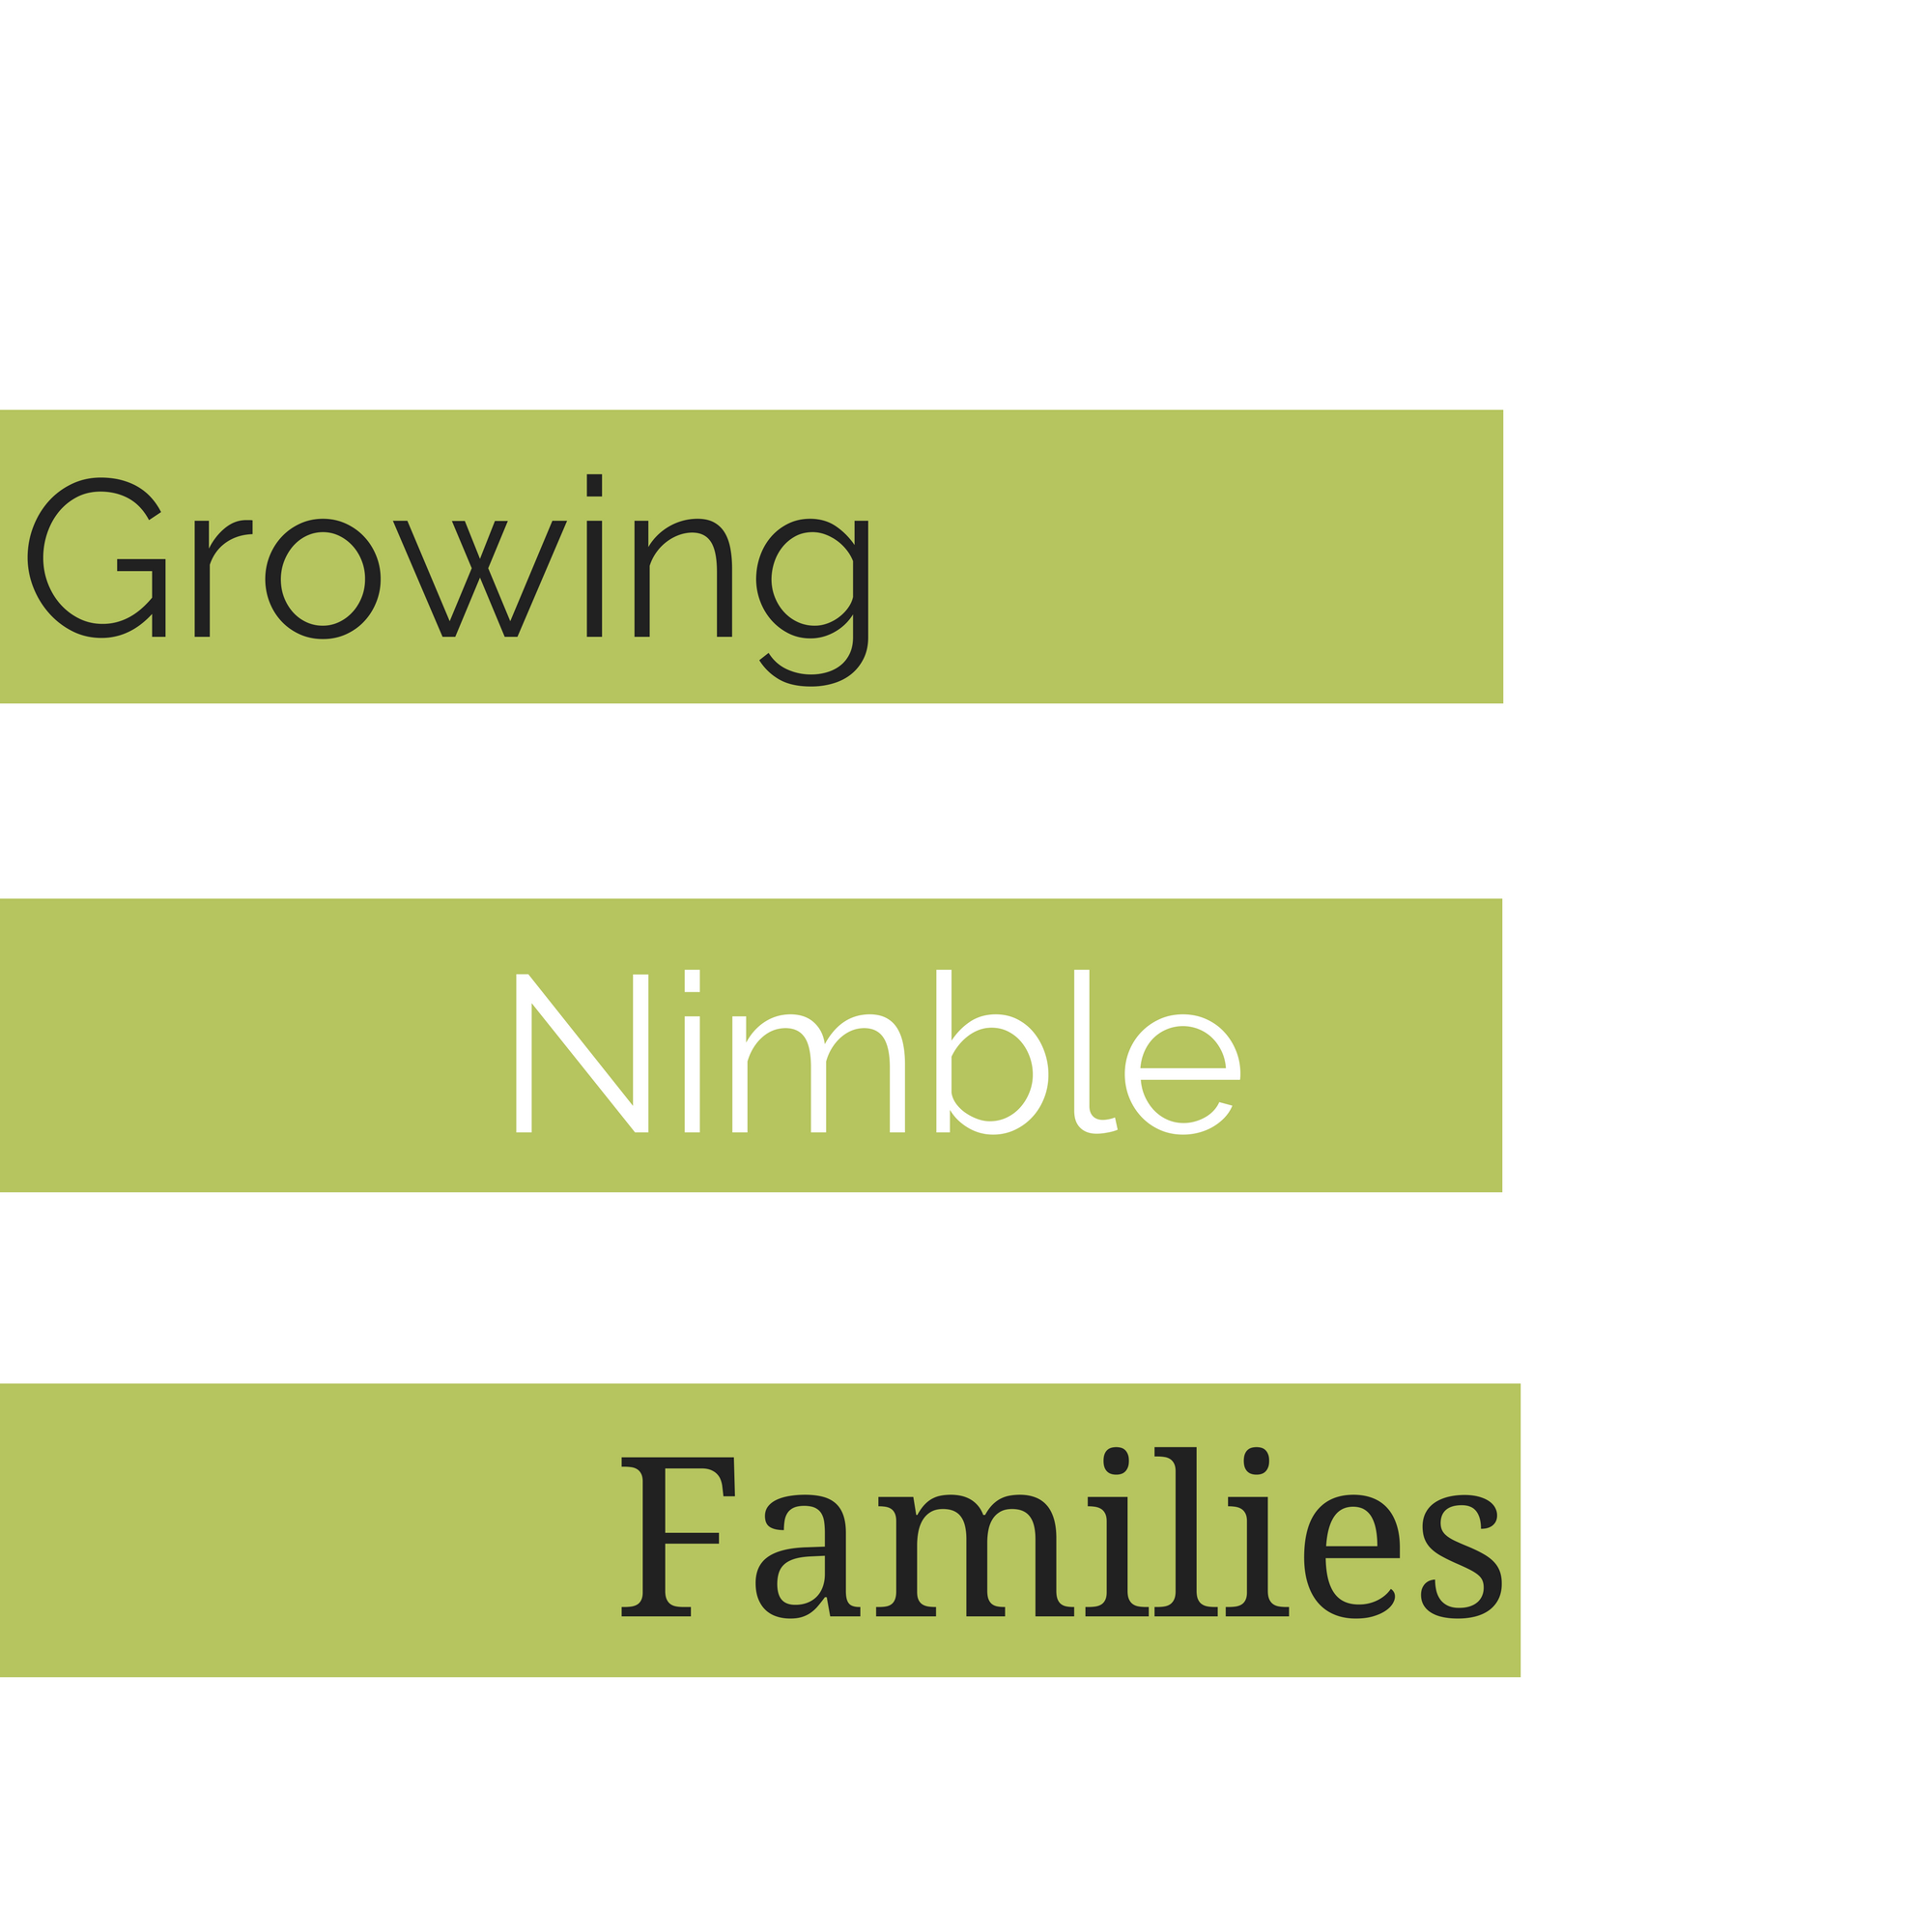 Growing Nimble Families